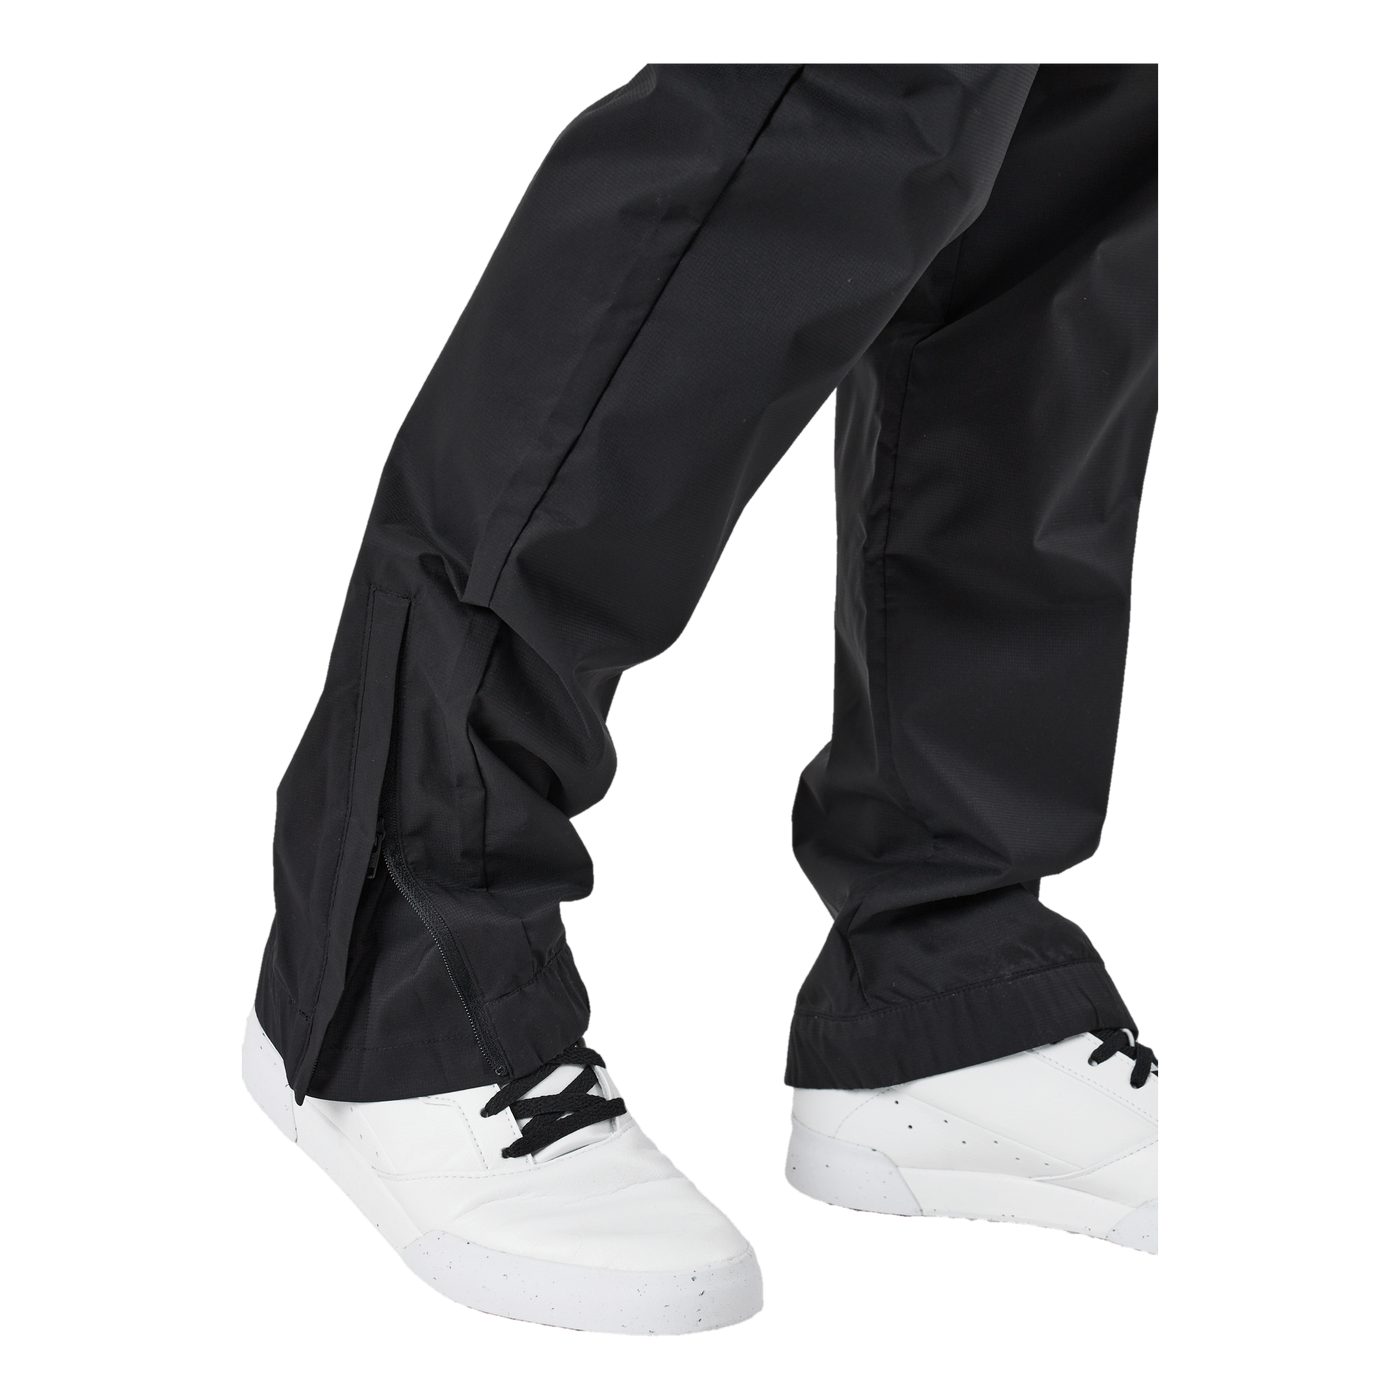 Provisional Golf Pants Black